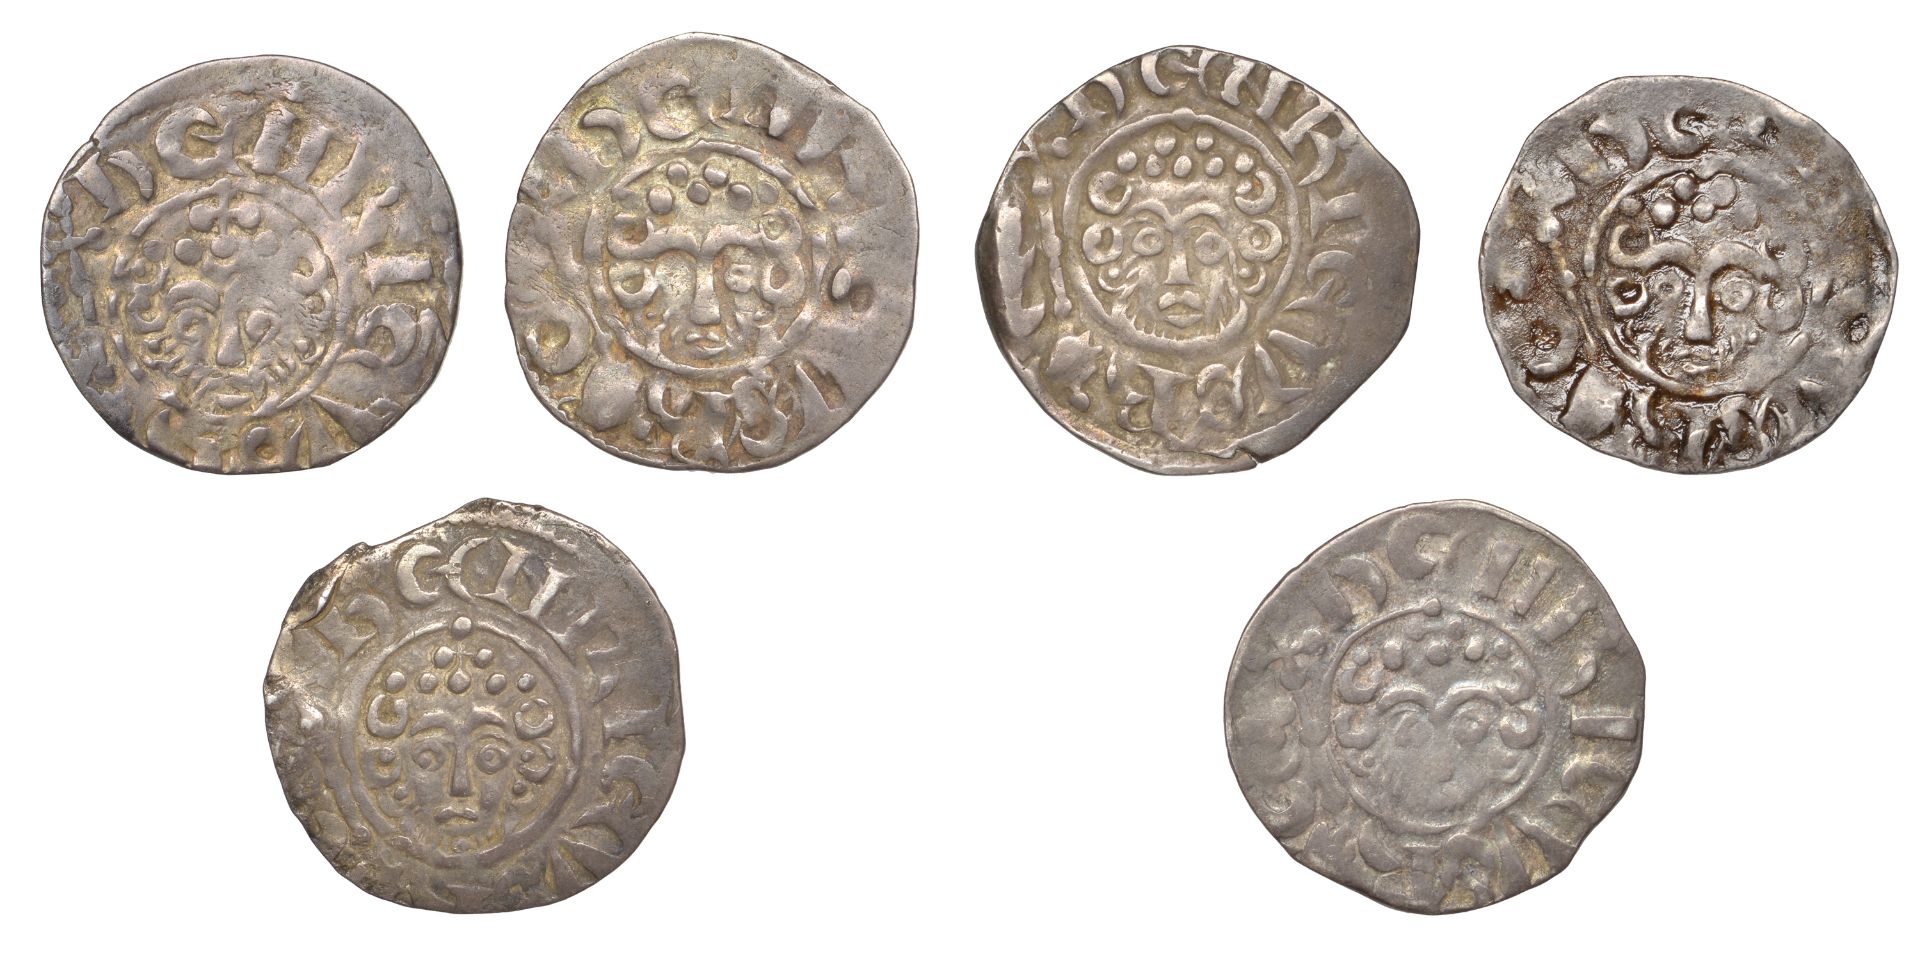 Henry III (1216-1272), Pennies (6), all London, Nichole, class VIIc2 (2), nichole on lvn, 1....